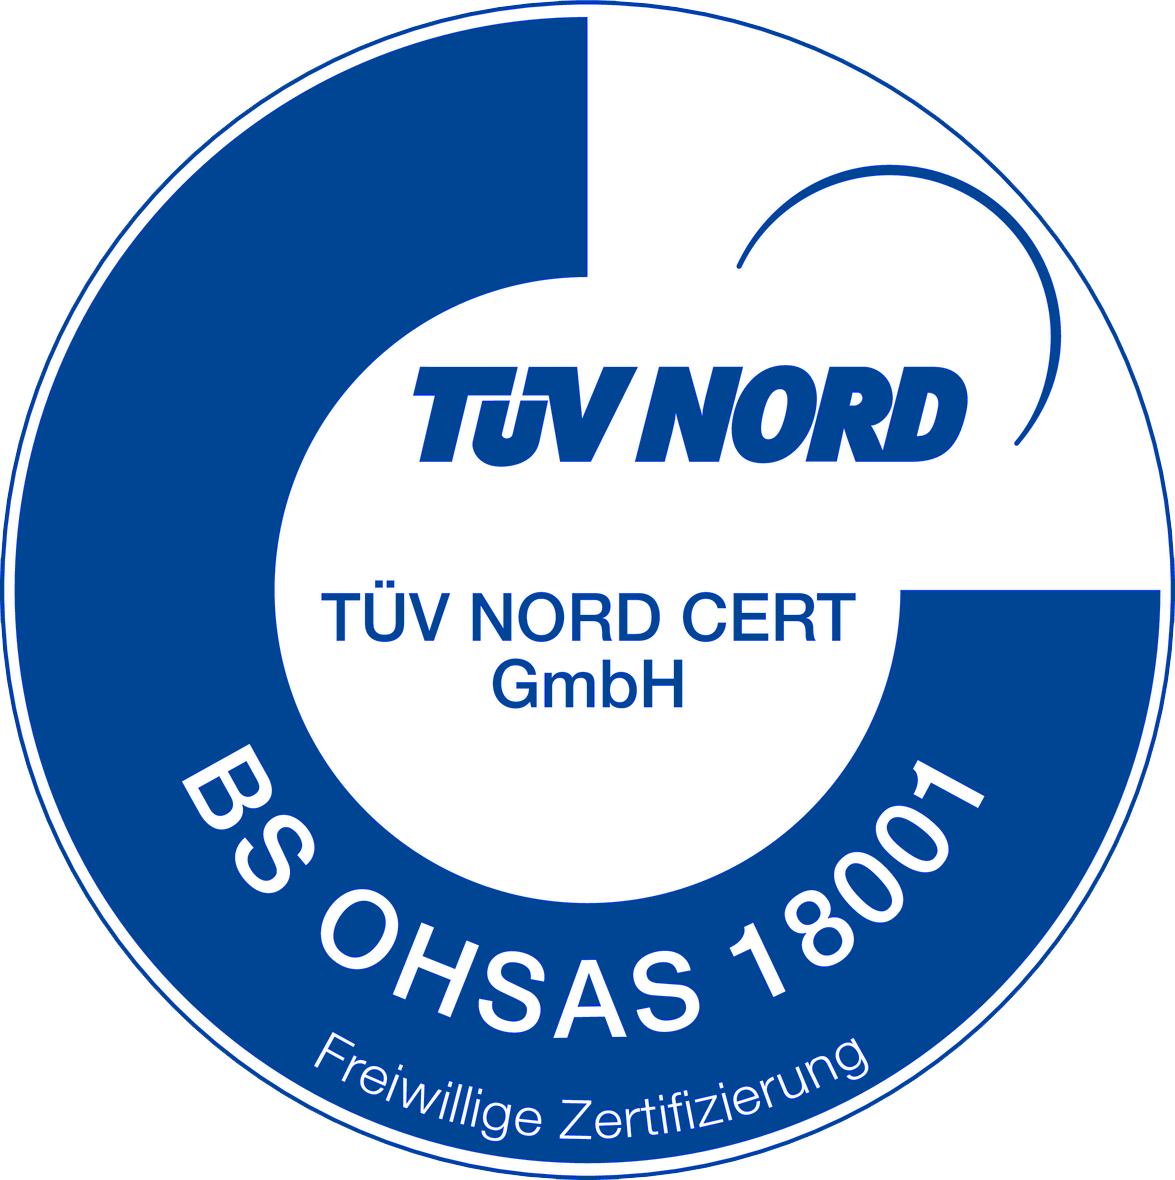 BS OHSAS 18001 Zertifikat